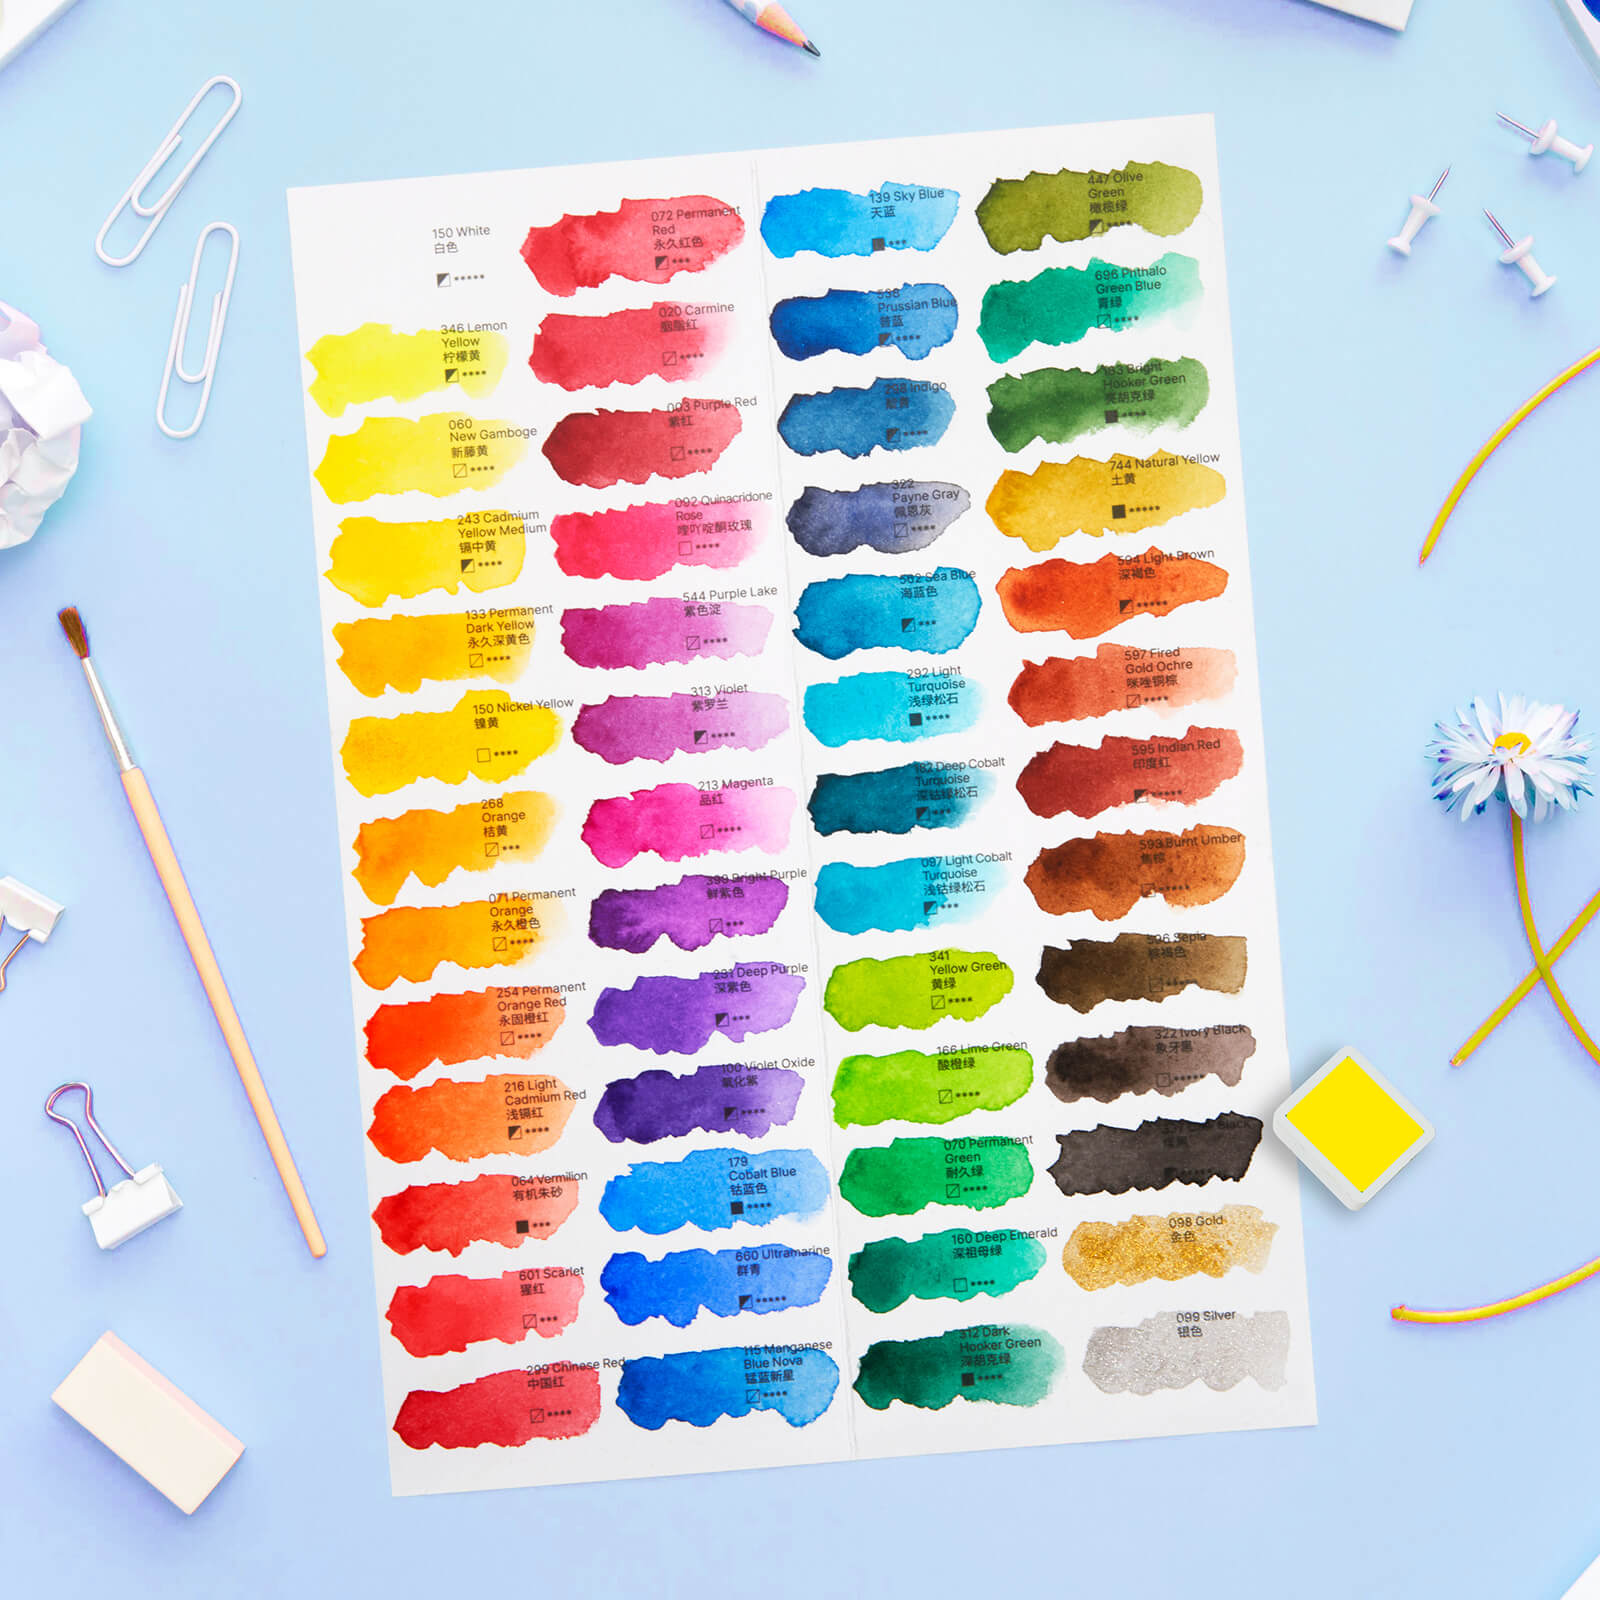 MeiLiang Solid Watercolor Paint Set 52 Colors Standard (Blue Box)